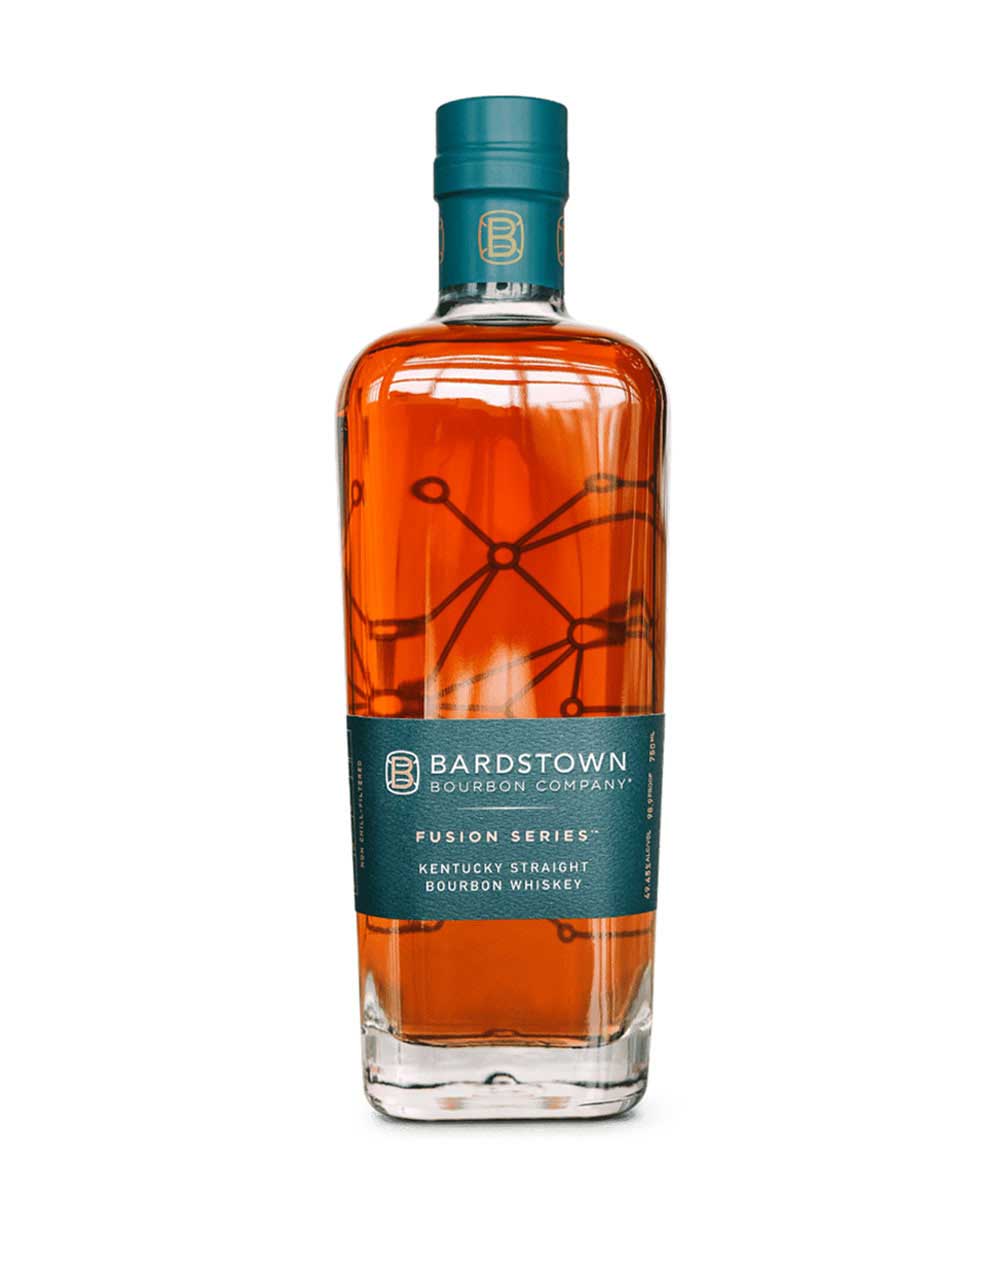 Bardstown Bourbon Company Fusion Series 1 Kentucky Straight Bourbon Whiskey